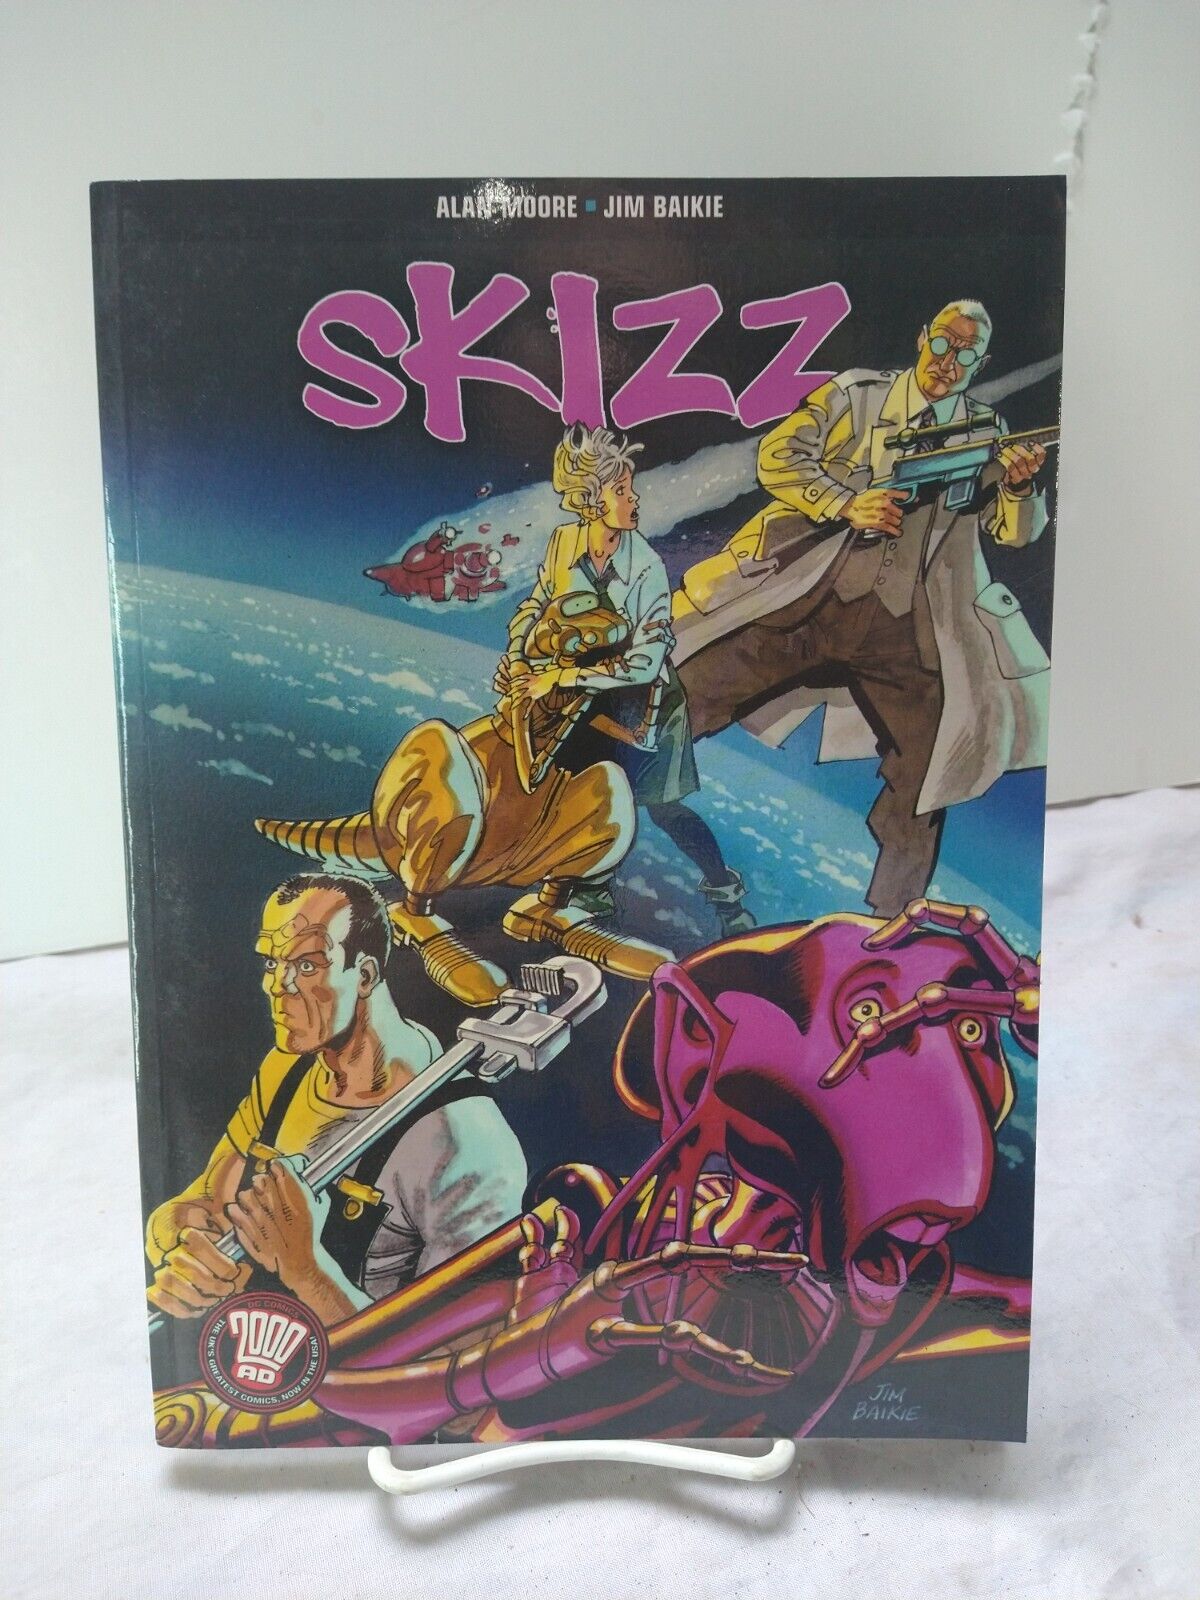 Skizz Trade Paperback Alan Moore Jim Baikie 2000 AD/DC Comics